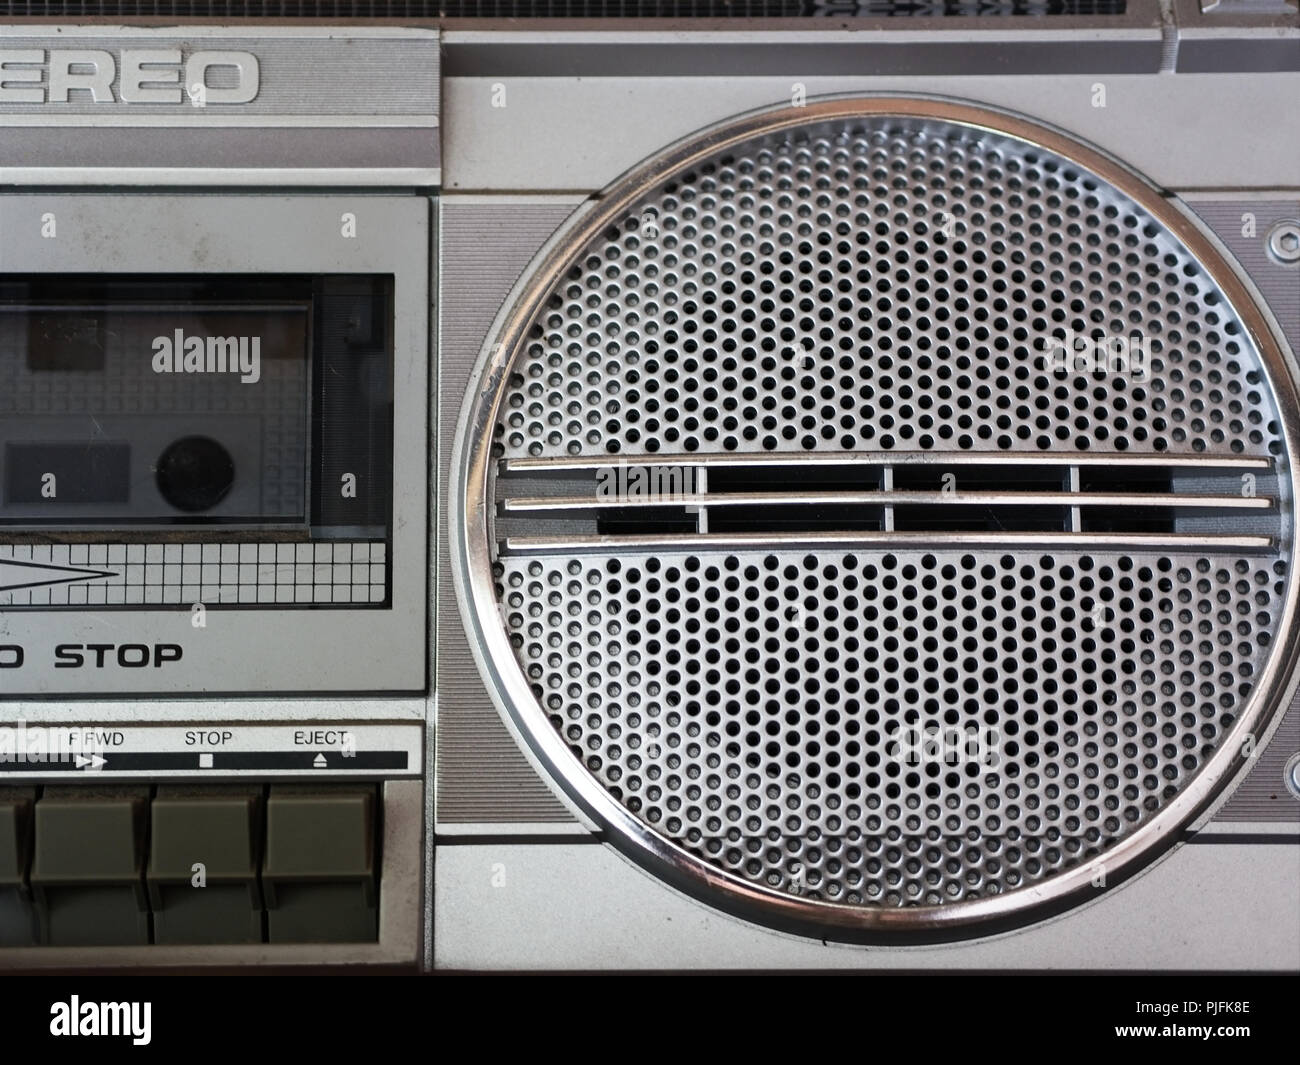 Close-up of retro / vintage portabl radio casset stereo audio player. Stock Photo